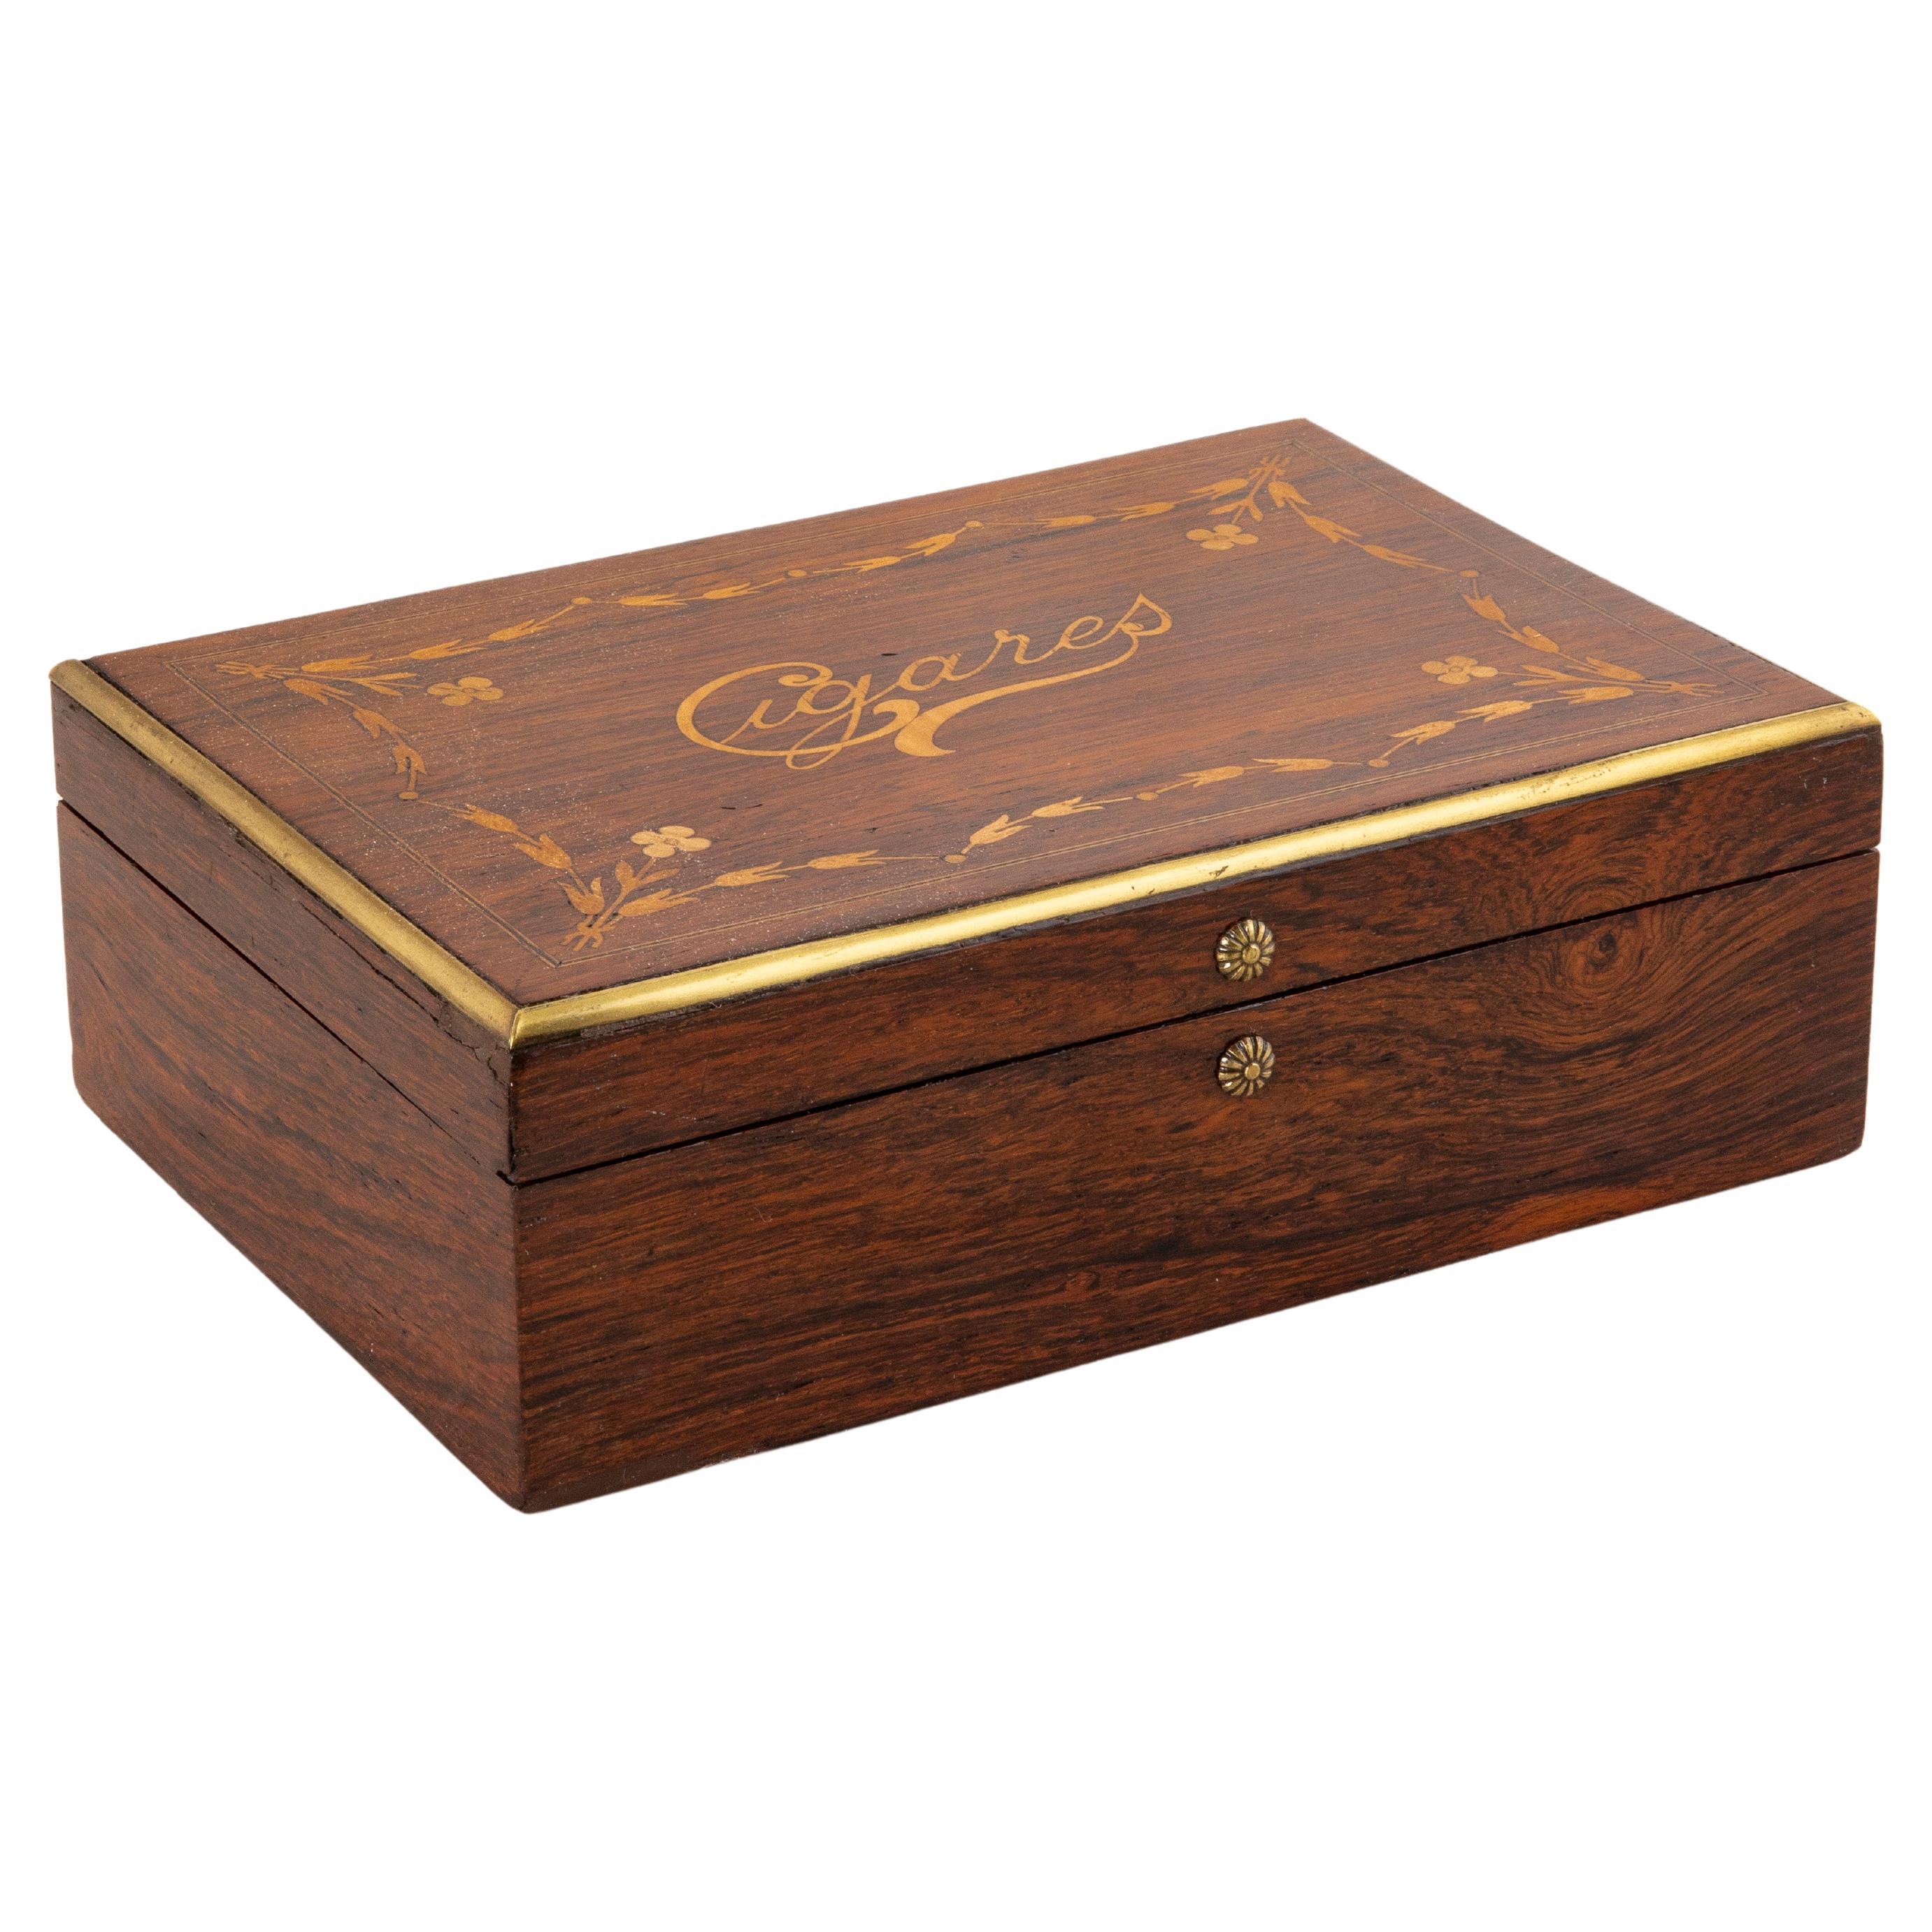 Mid-19th Century French Napoleon III Period Marquetry Cigar Box, Music Box